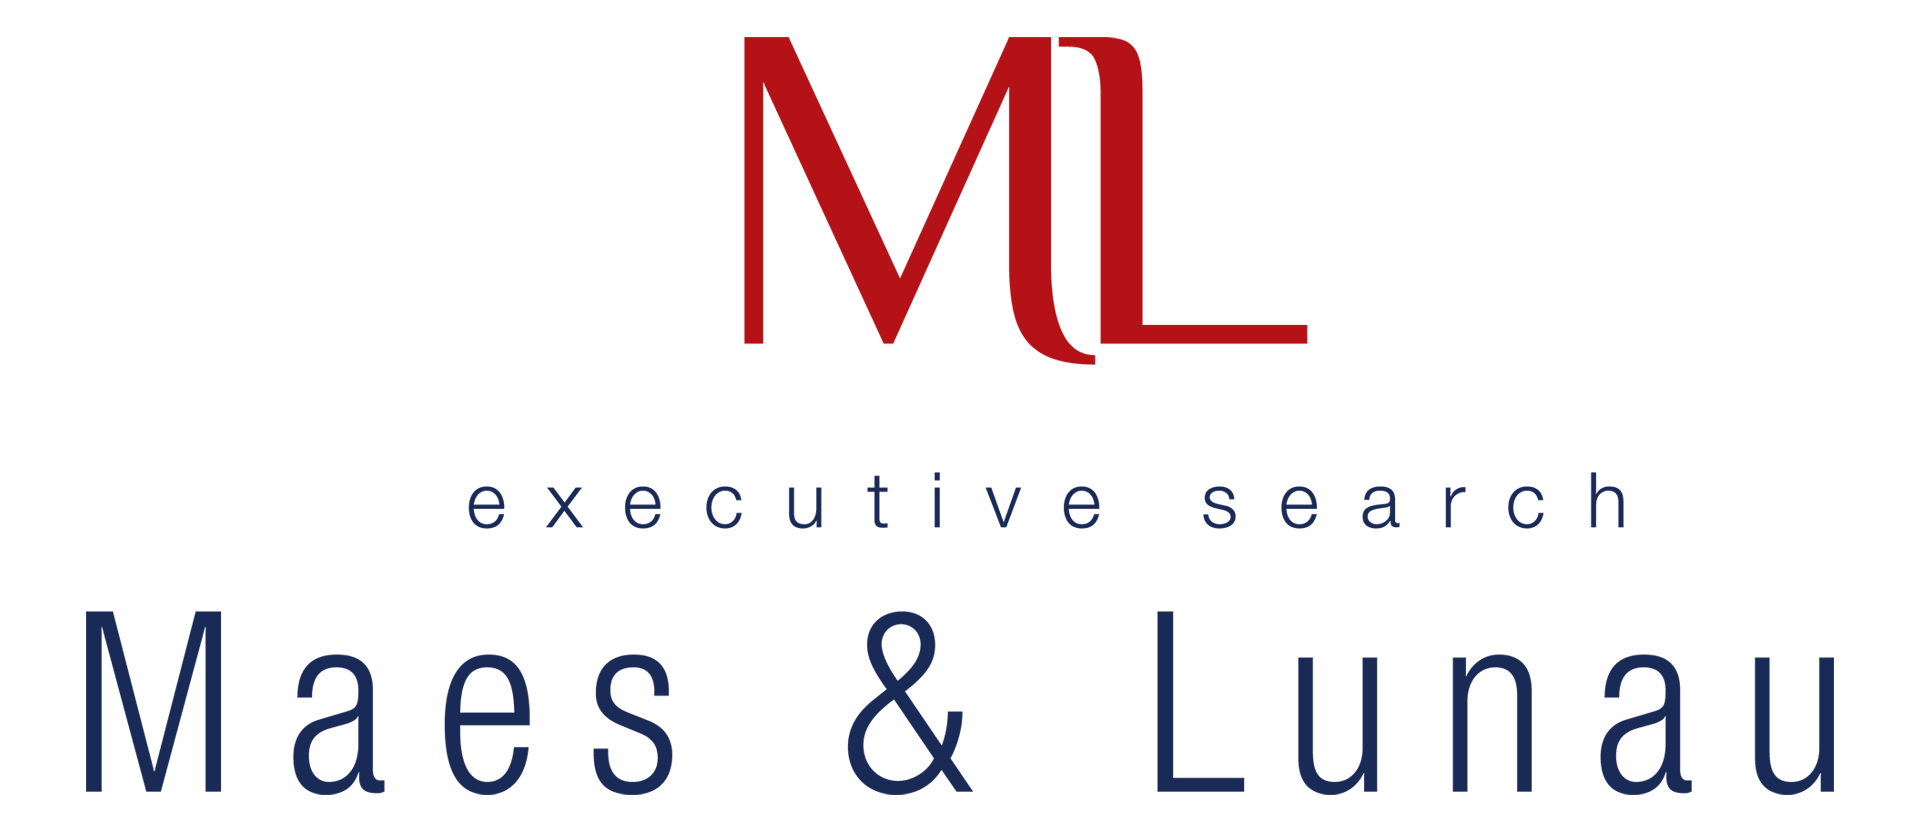 Maes & Lunau executive search